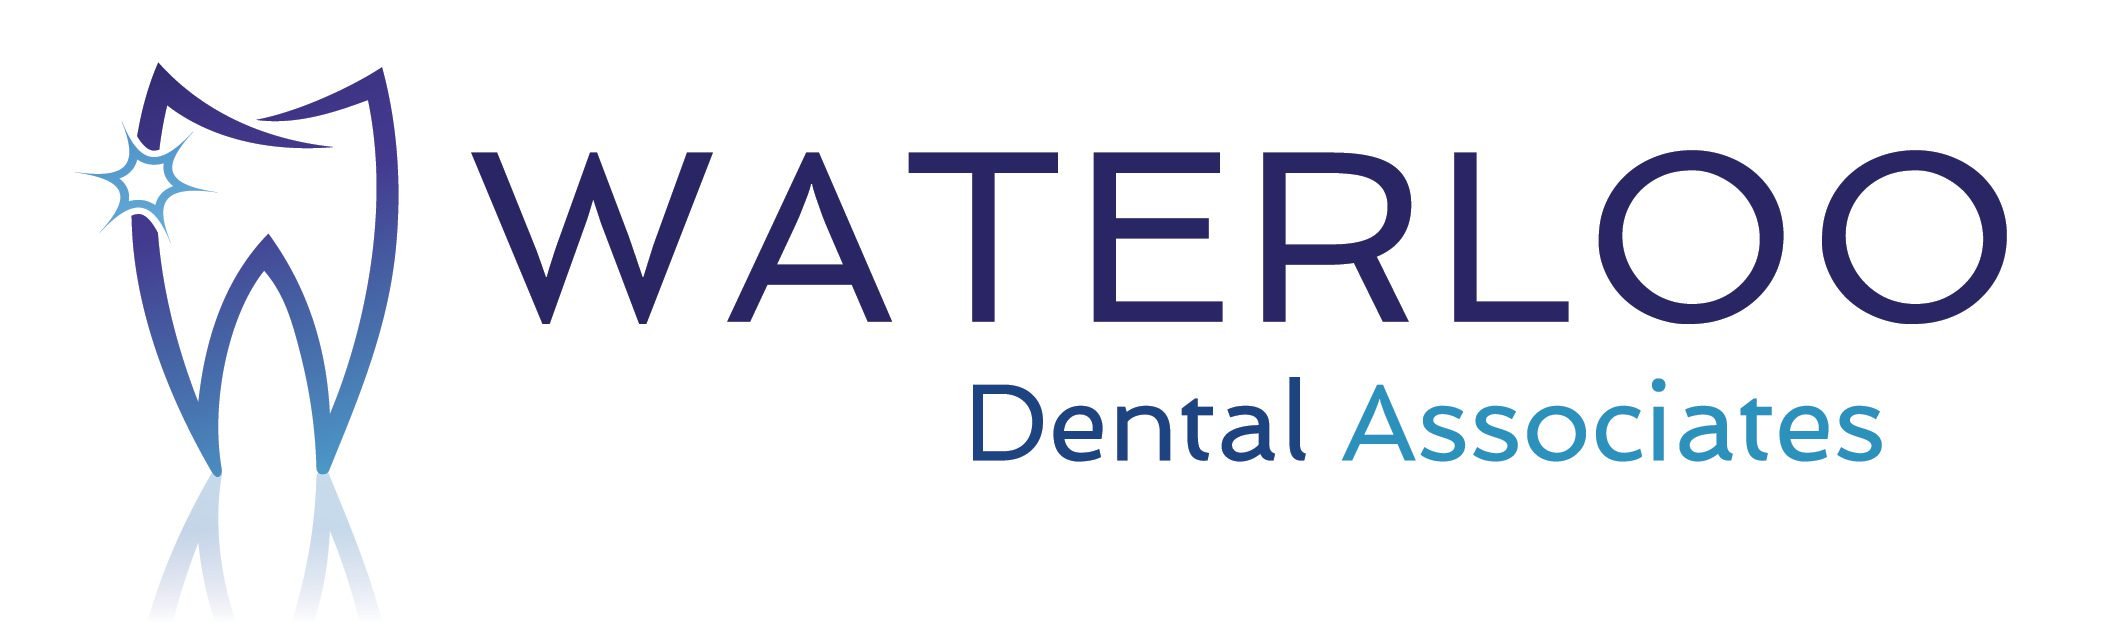 Waterloo Dental Associates_Logo.jpg